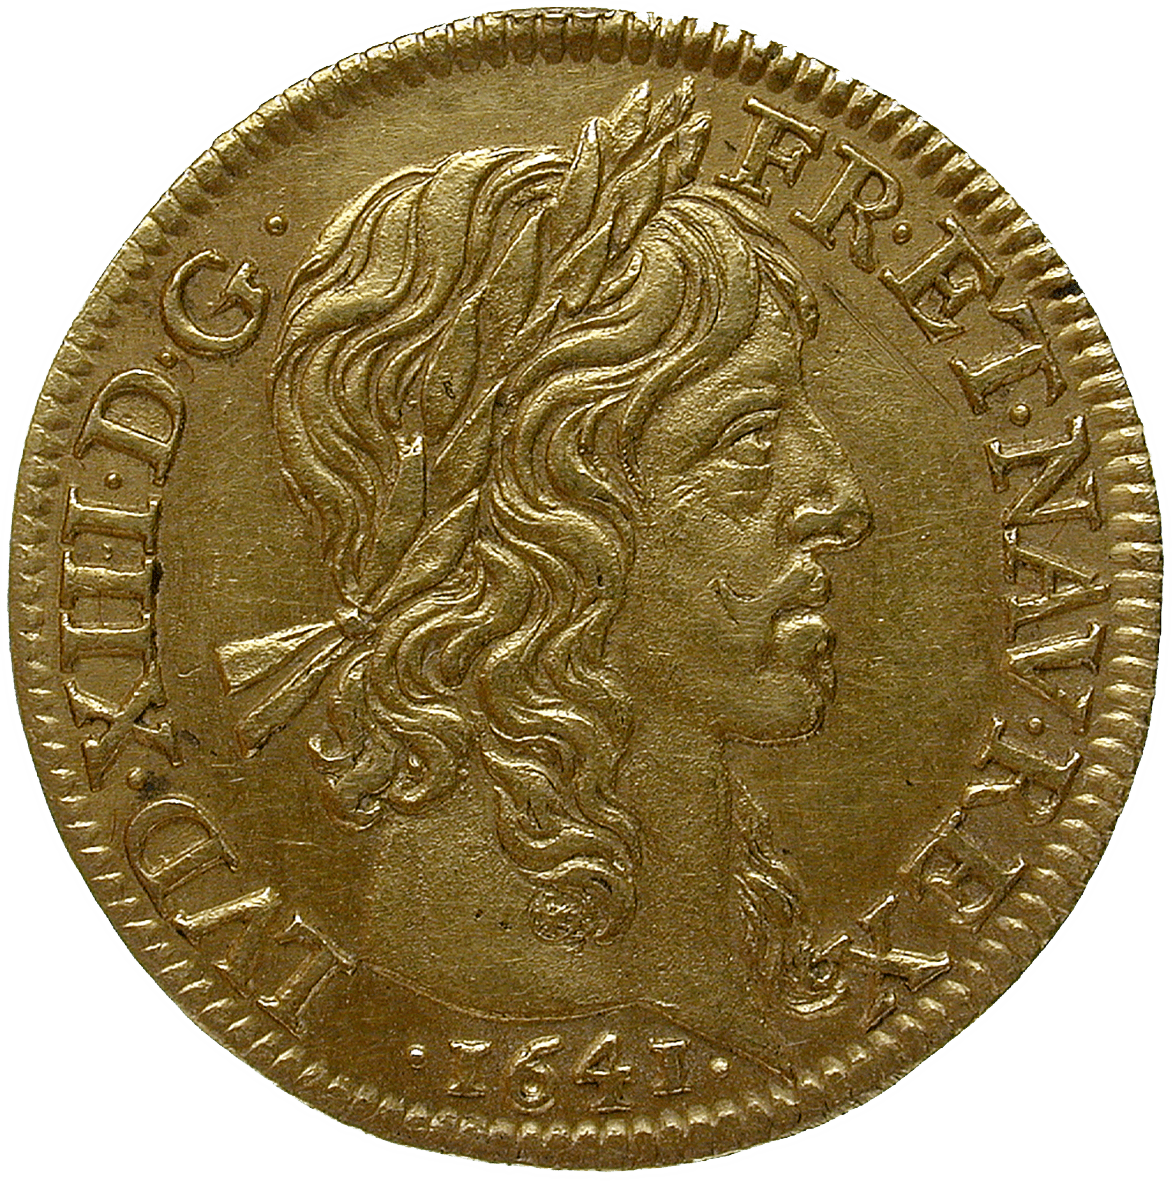 Königreich Frankreich, Ludwig XIII., Louis d'or 1641 (obverse)